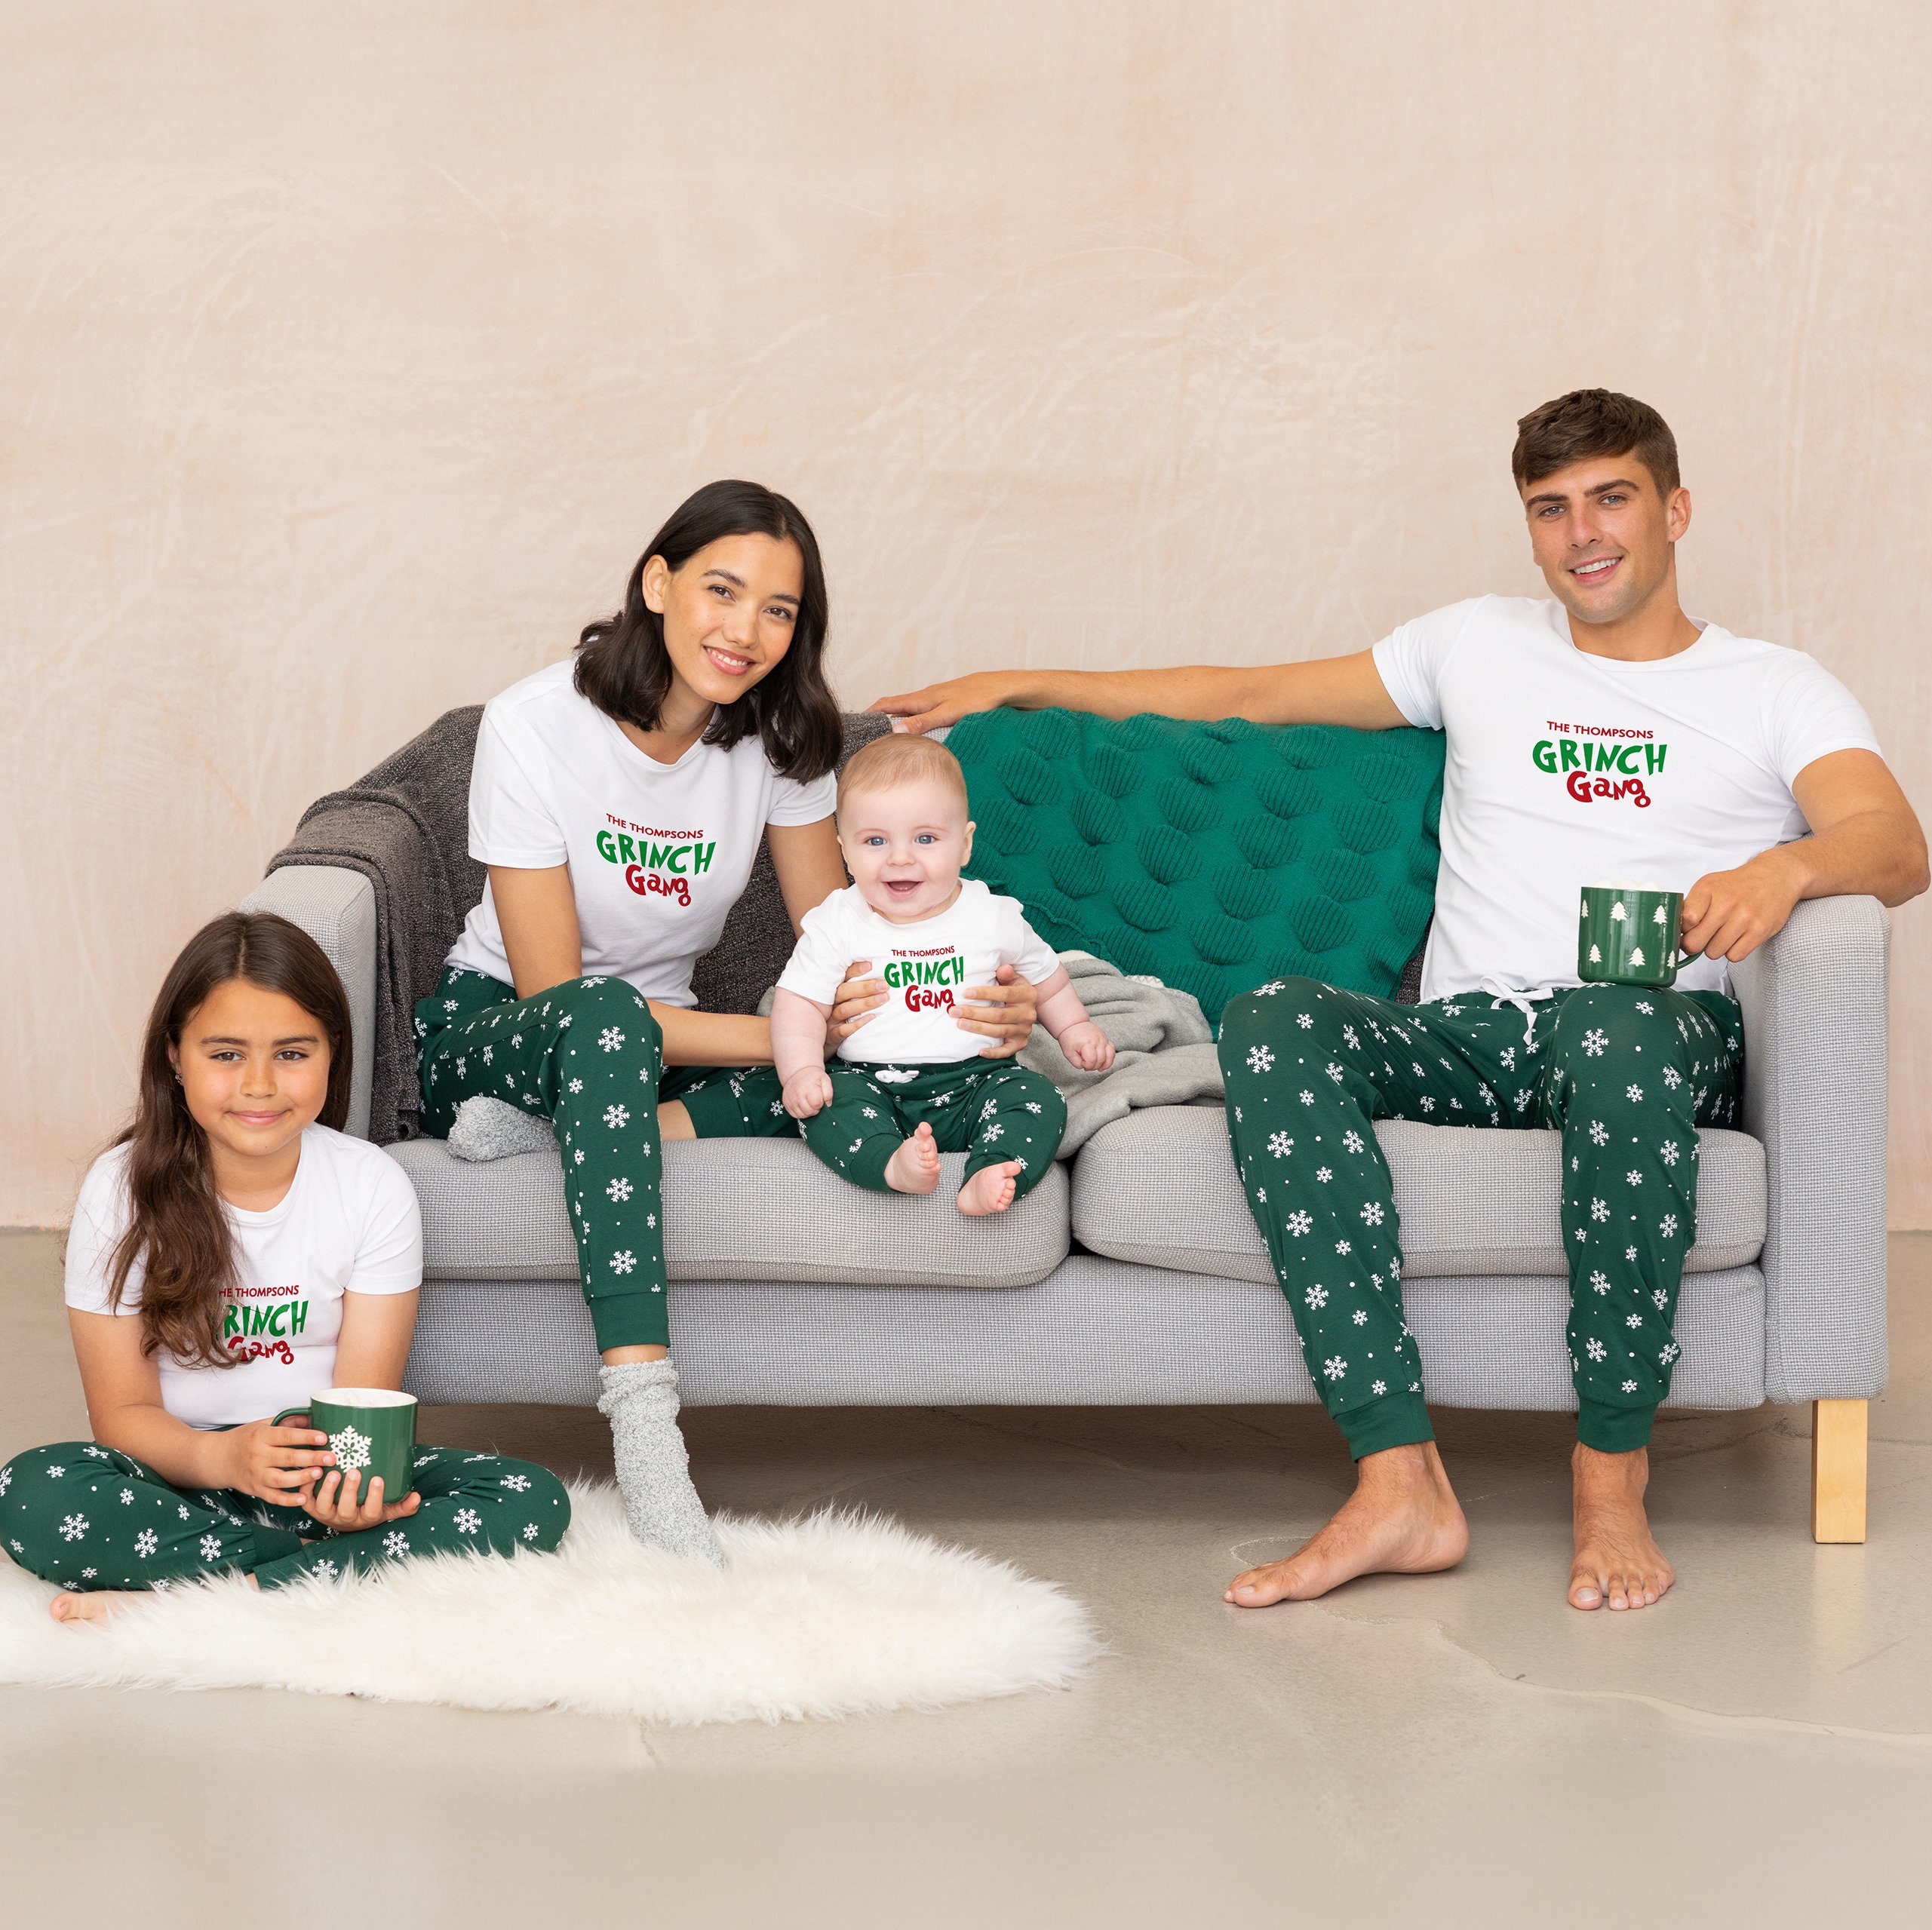 Family Christmas Pajamas Matching Sets Matching Family Pajamas Comfy Pajama  Set Family Clothes tops under 10 dollars tunics under 15 dollars 1 items